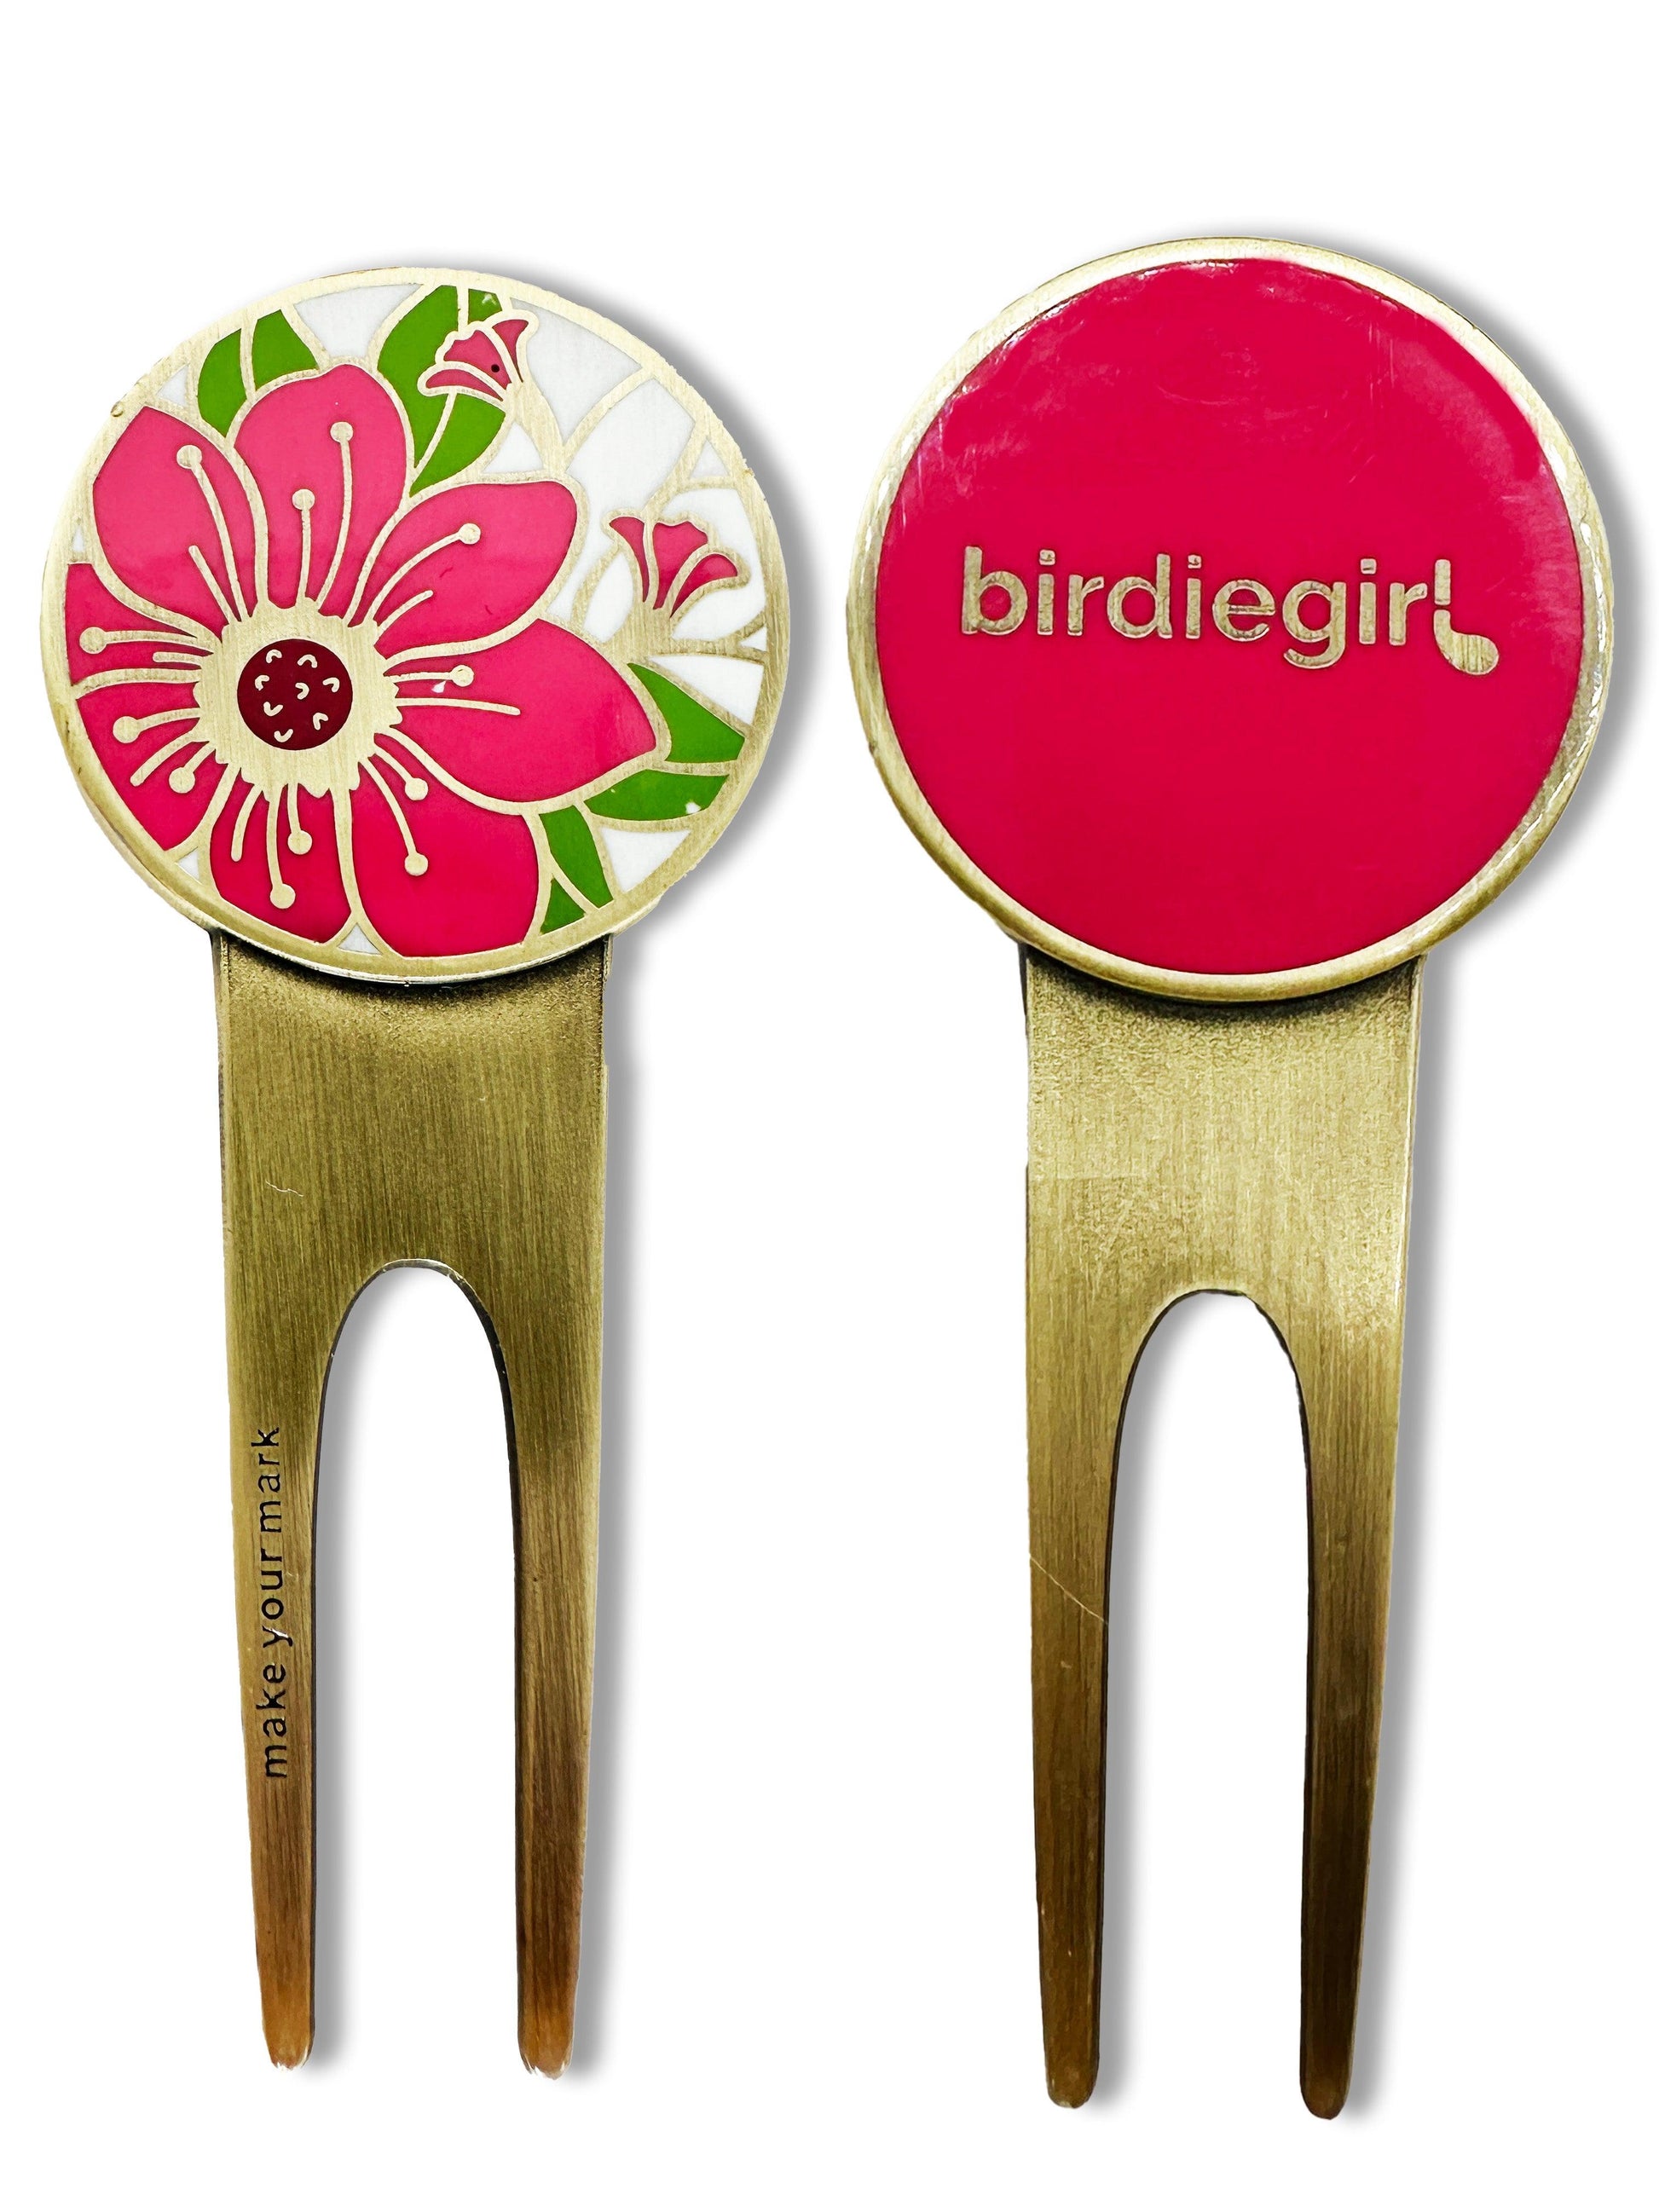 I Feel Prettee Gift Set: Collector's Edition Divot Tool Set - Birdie Girl Golf